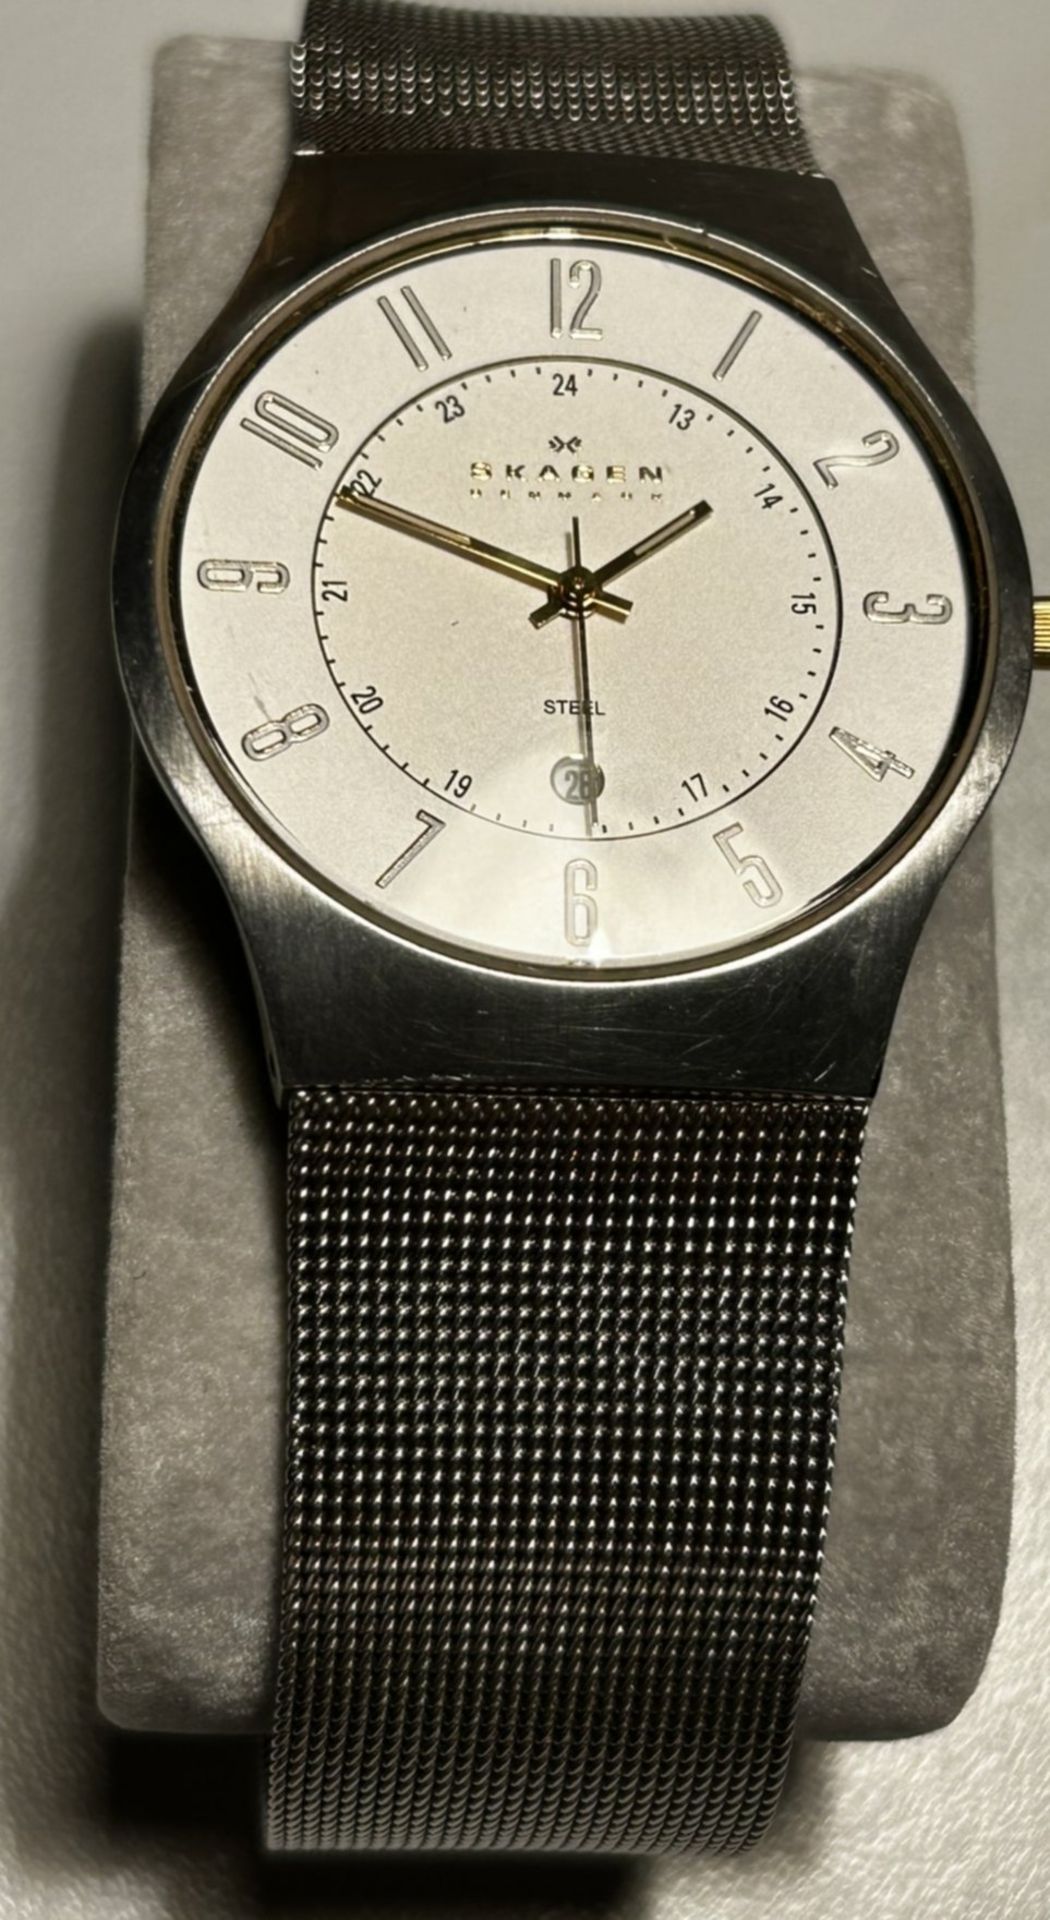 Skagen Quartz Armbanduhrm Slimline, 233xLSGS, orig. Band, sehr guter Zustand - Image 2 of 3